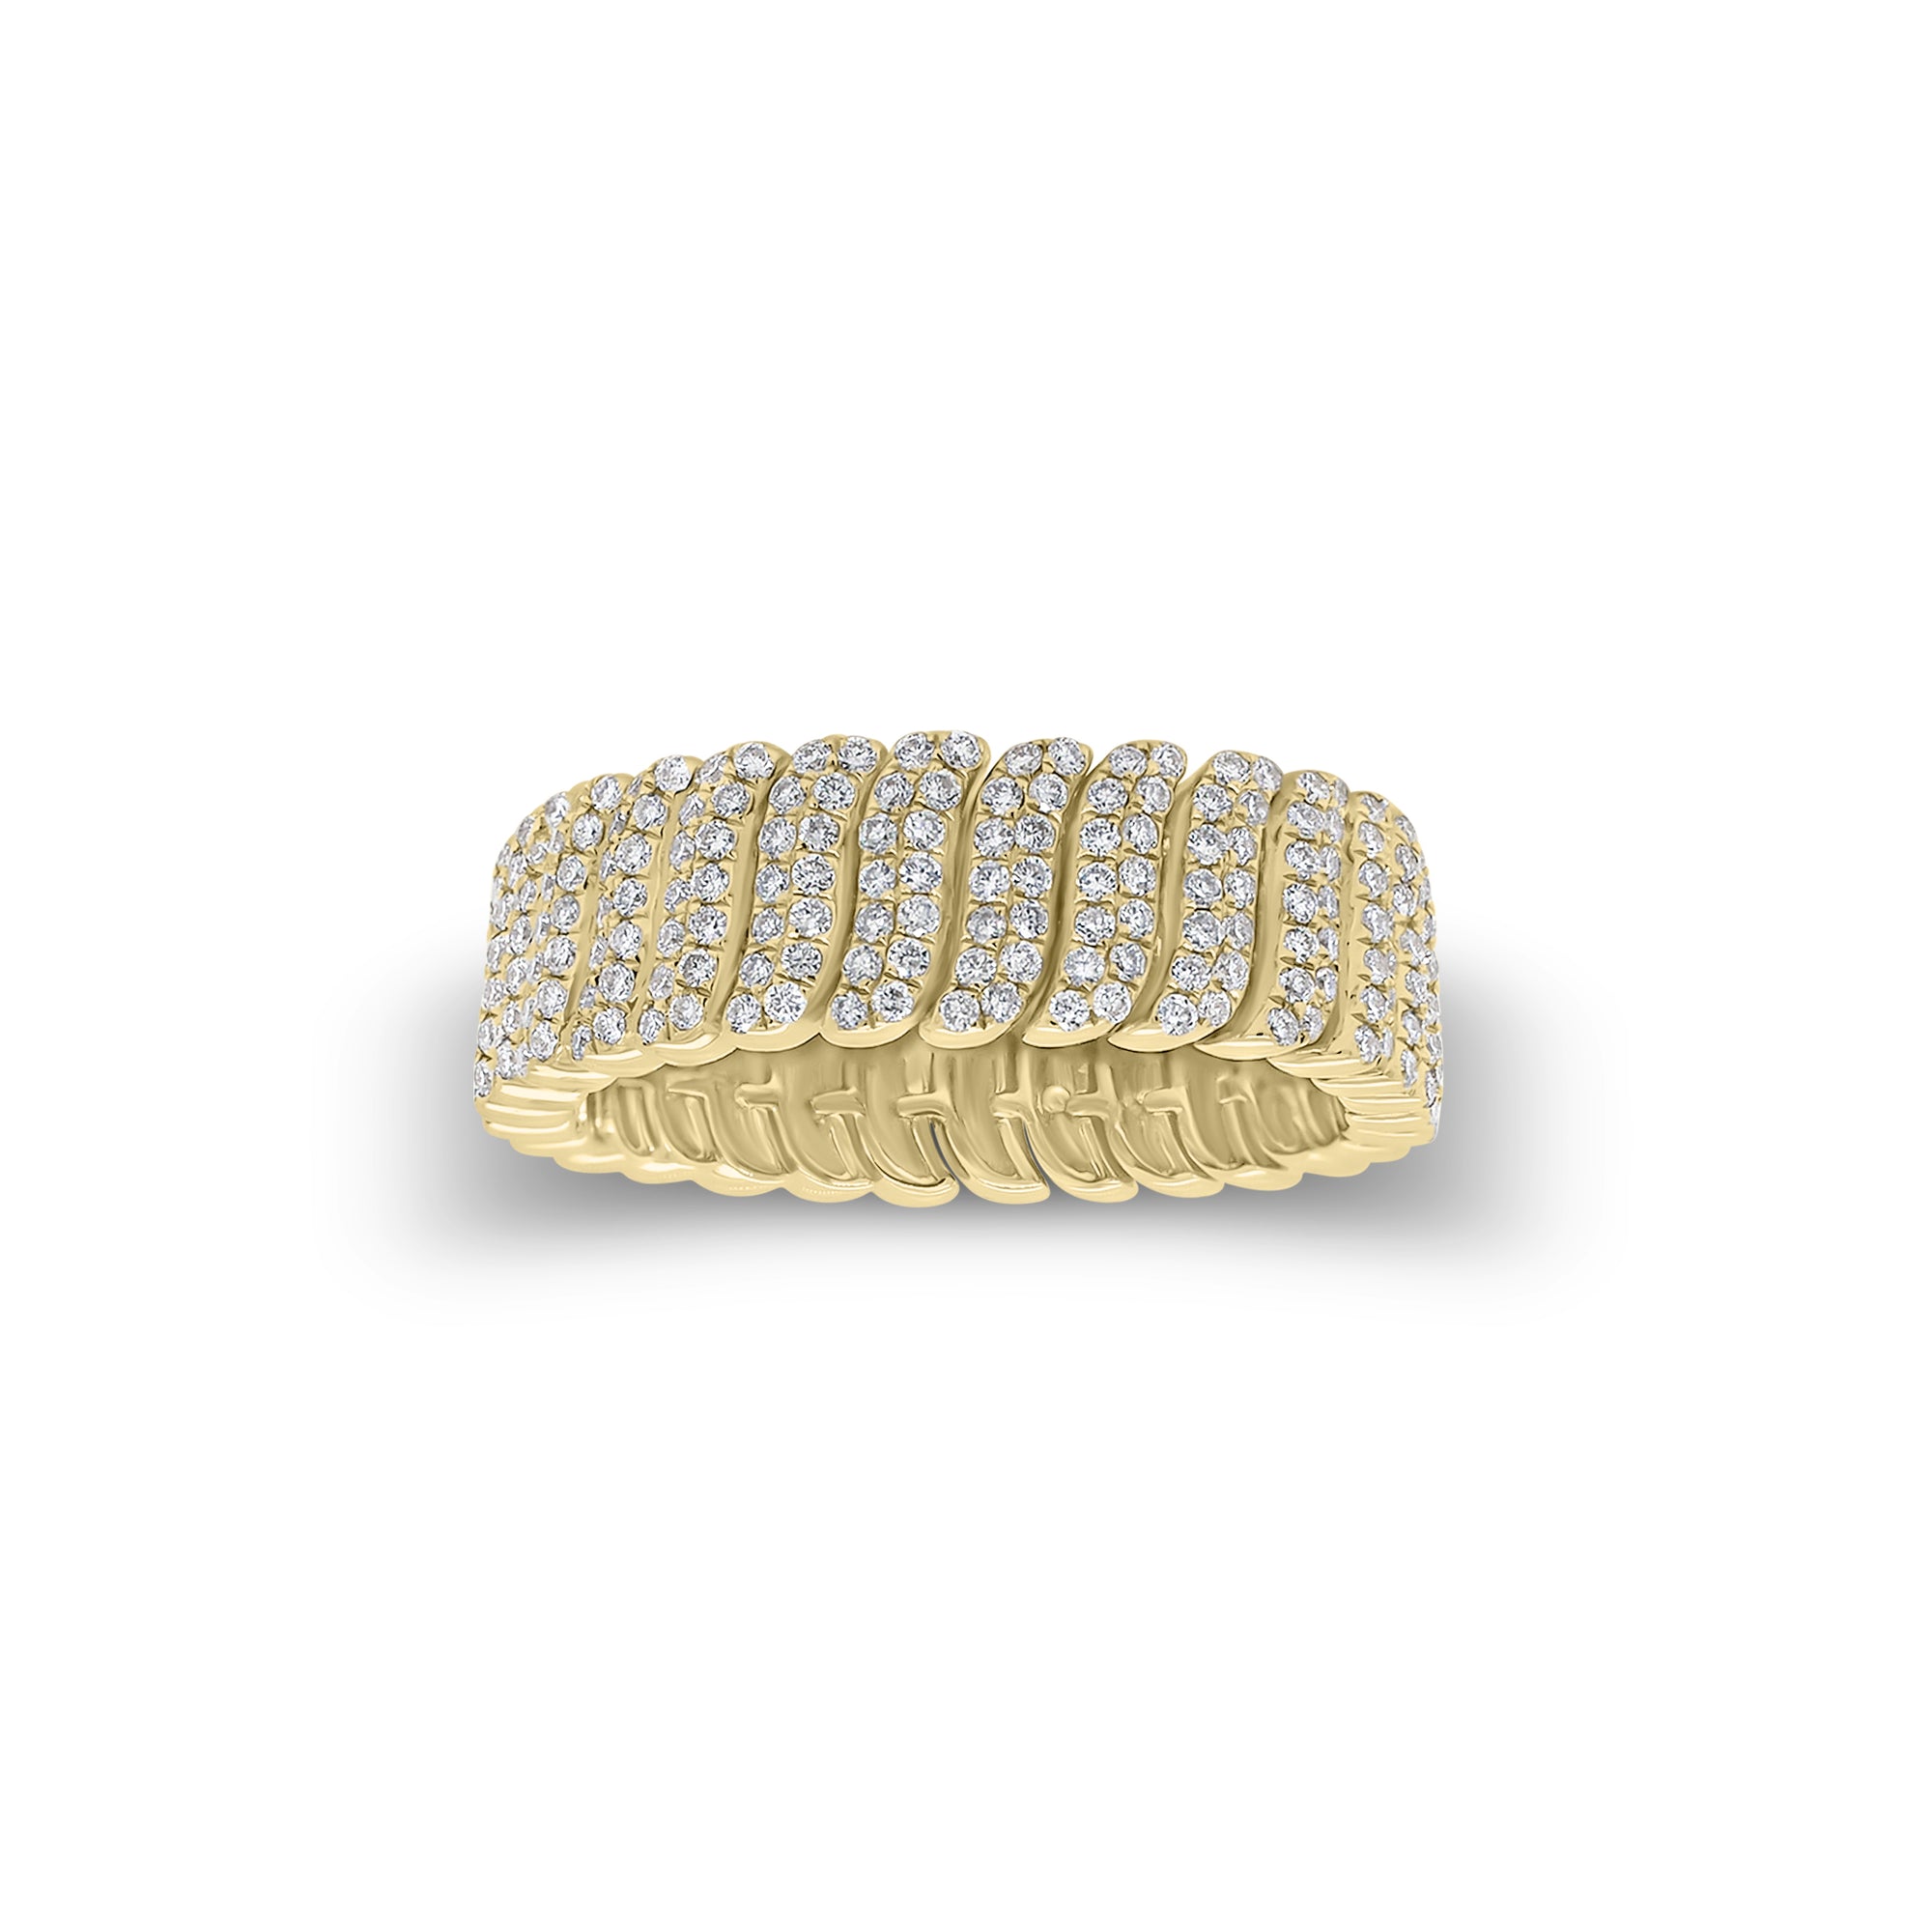 Pave Diamond Wave Band - 14K gold weighing 5.10 grams  - 406 round diamonds weighing 1.13 carats